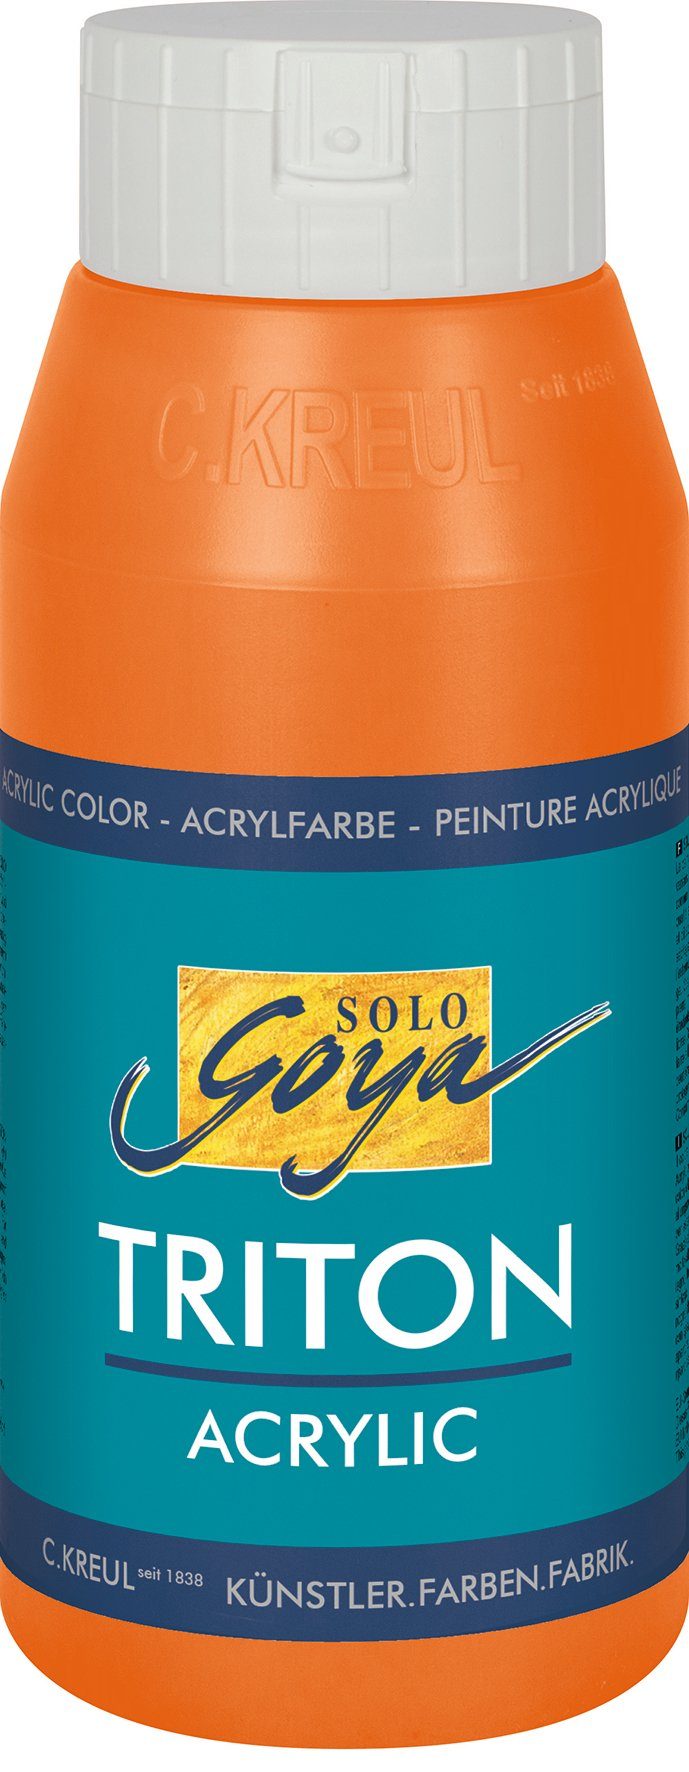 Aprikose 750 Acrylfarbe Goya Acrylic, Triton Kreul ml Solo